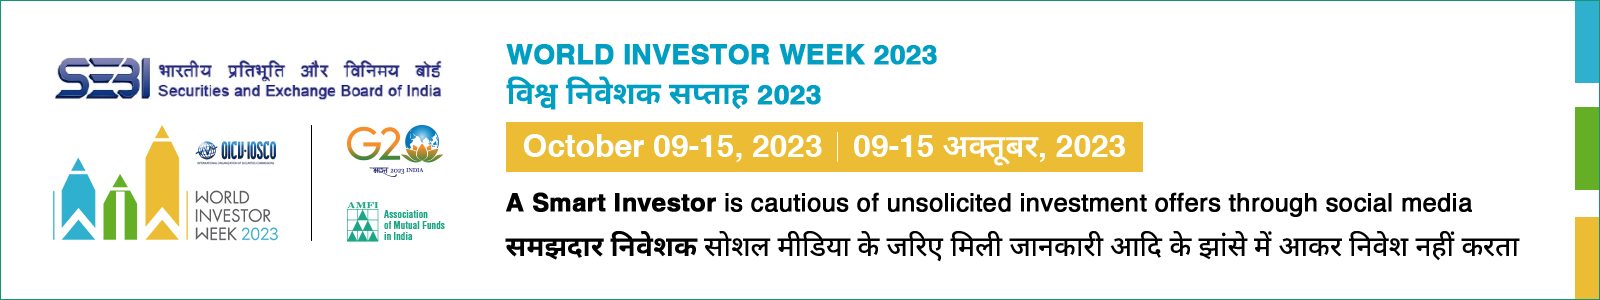 World investor week 2023